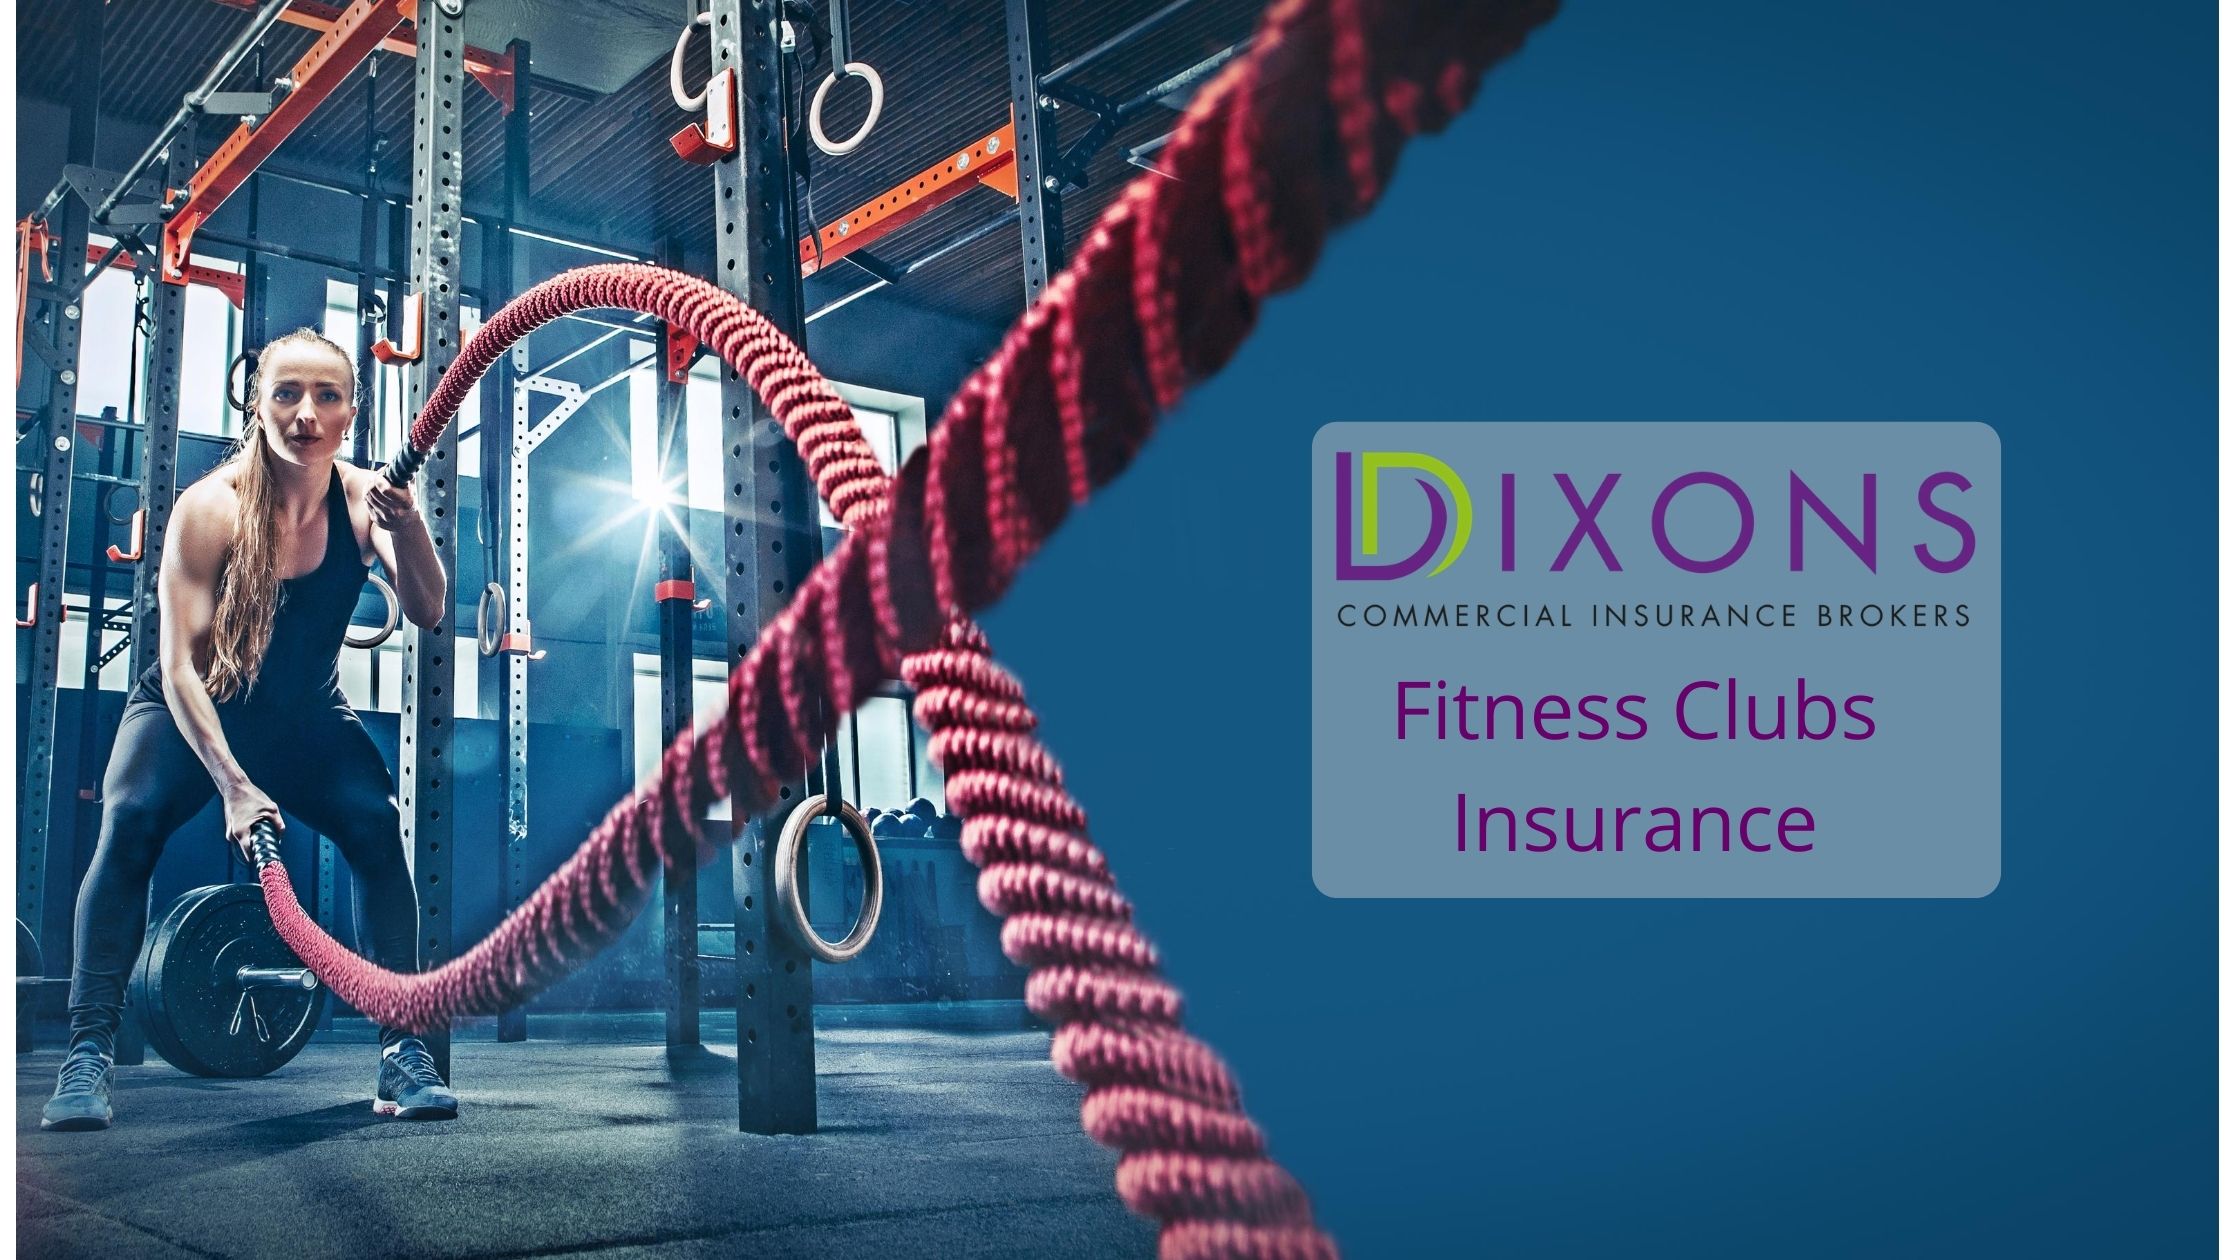 https://www.dixonsinsurance.co.uk/wp-content/uploads/2020/08/Fitness-Clubs-Insurance-1.jpg